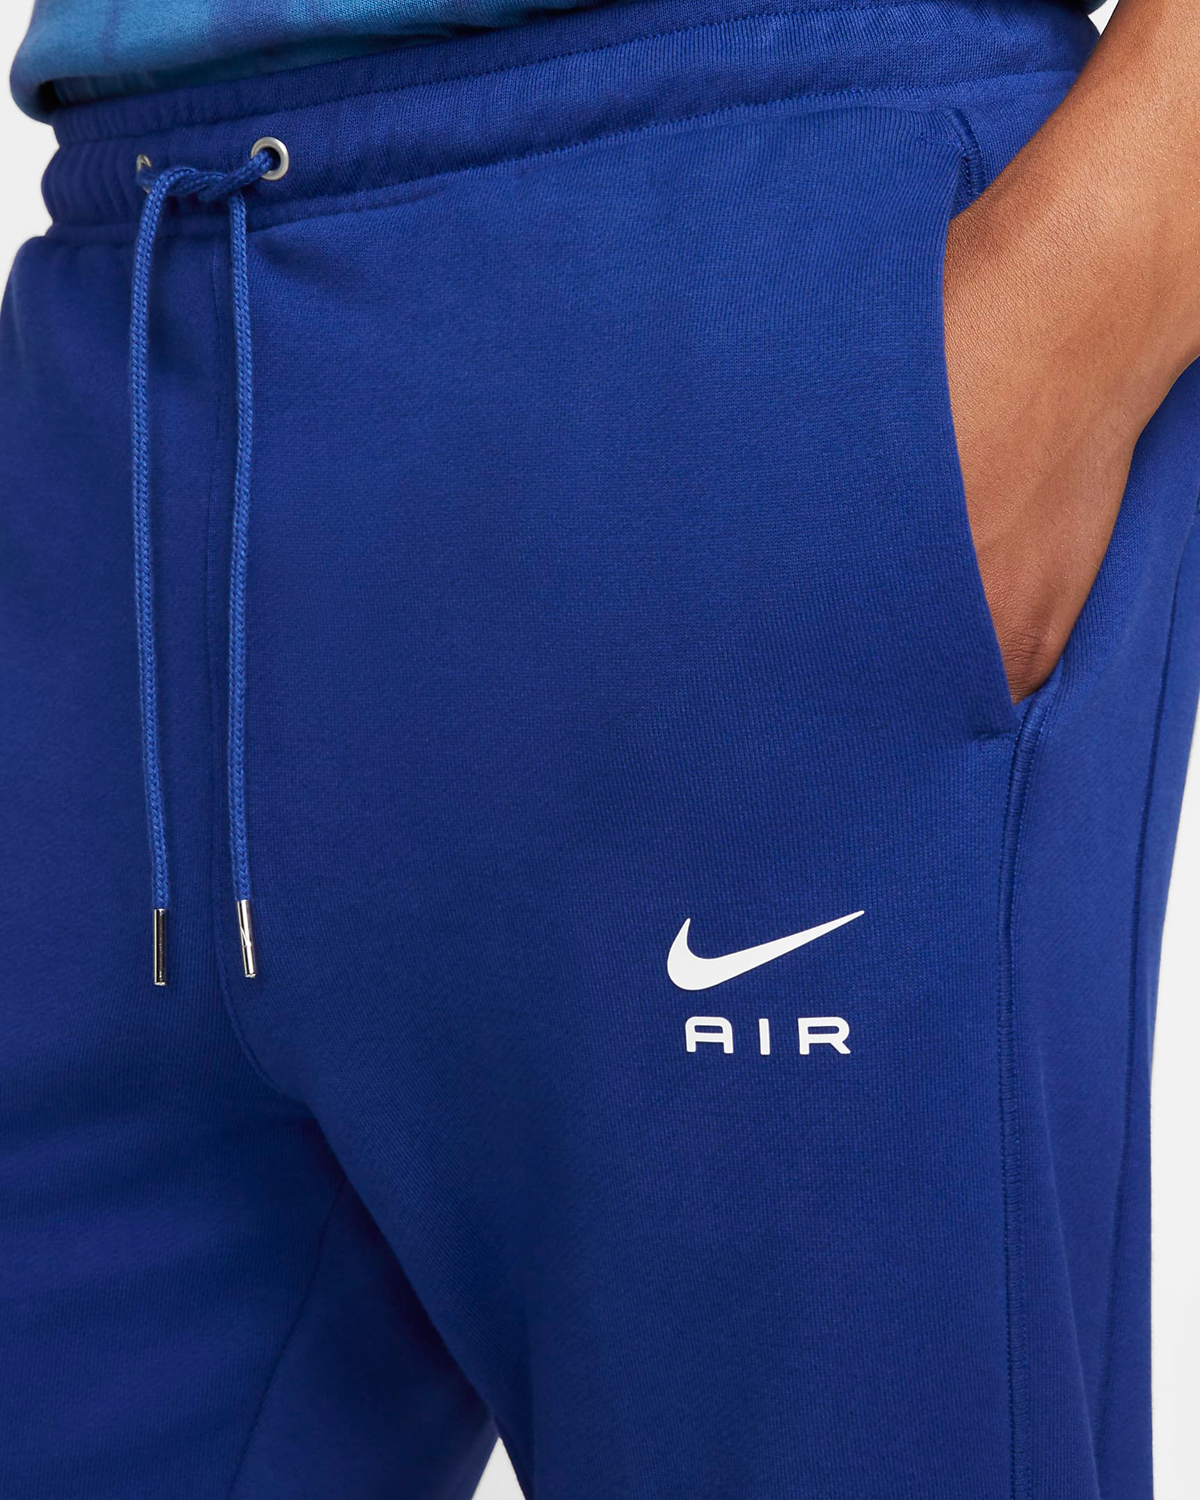 Nike-Air-Jogger-Pants-Deep-Royal-Blue-2